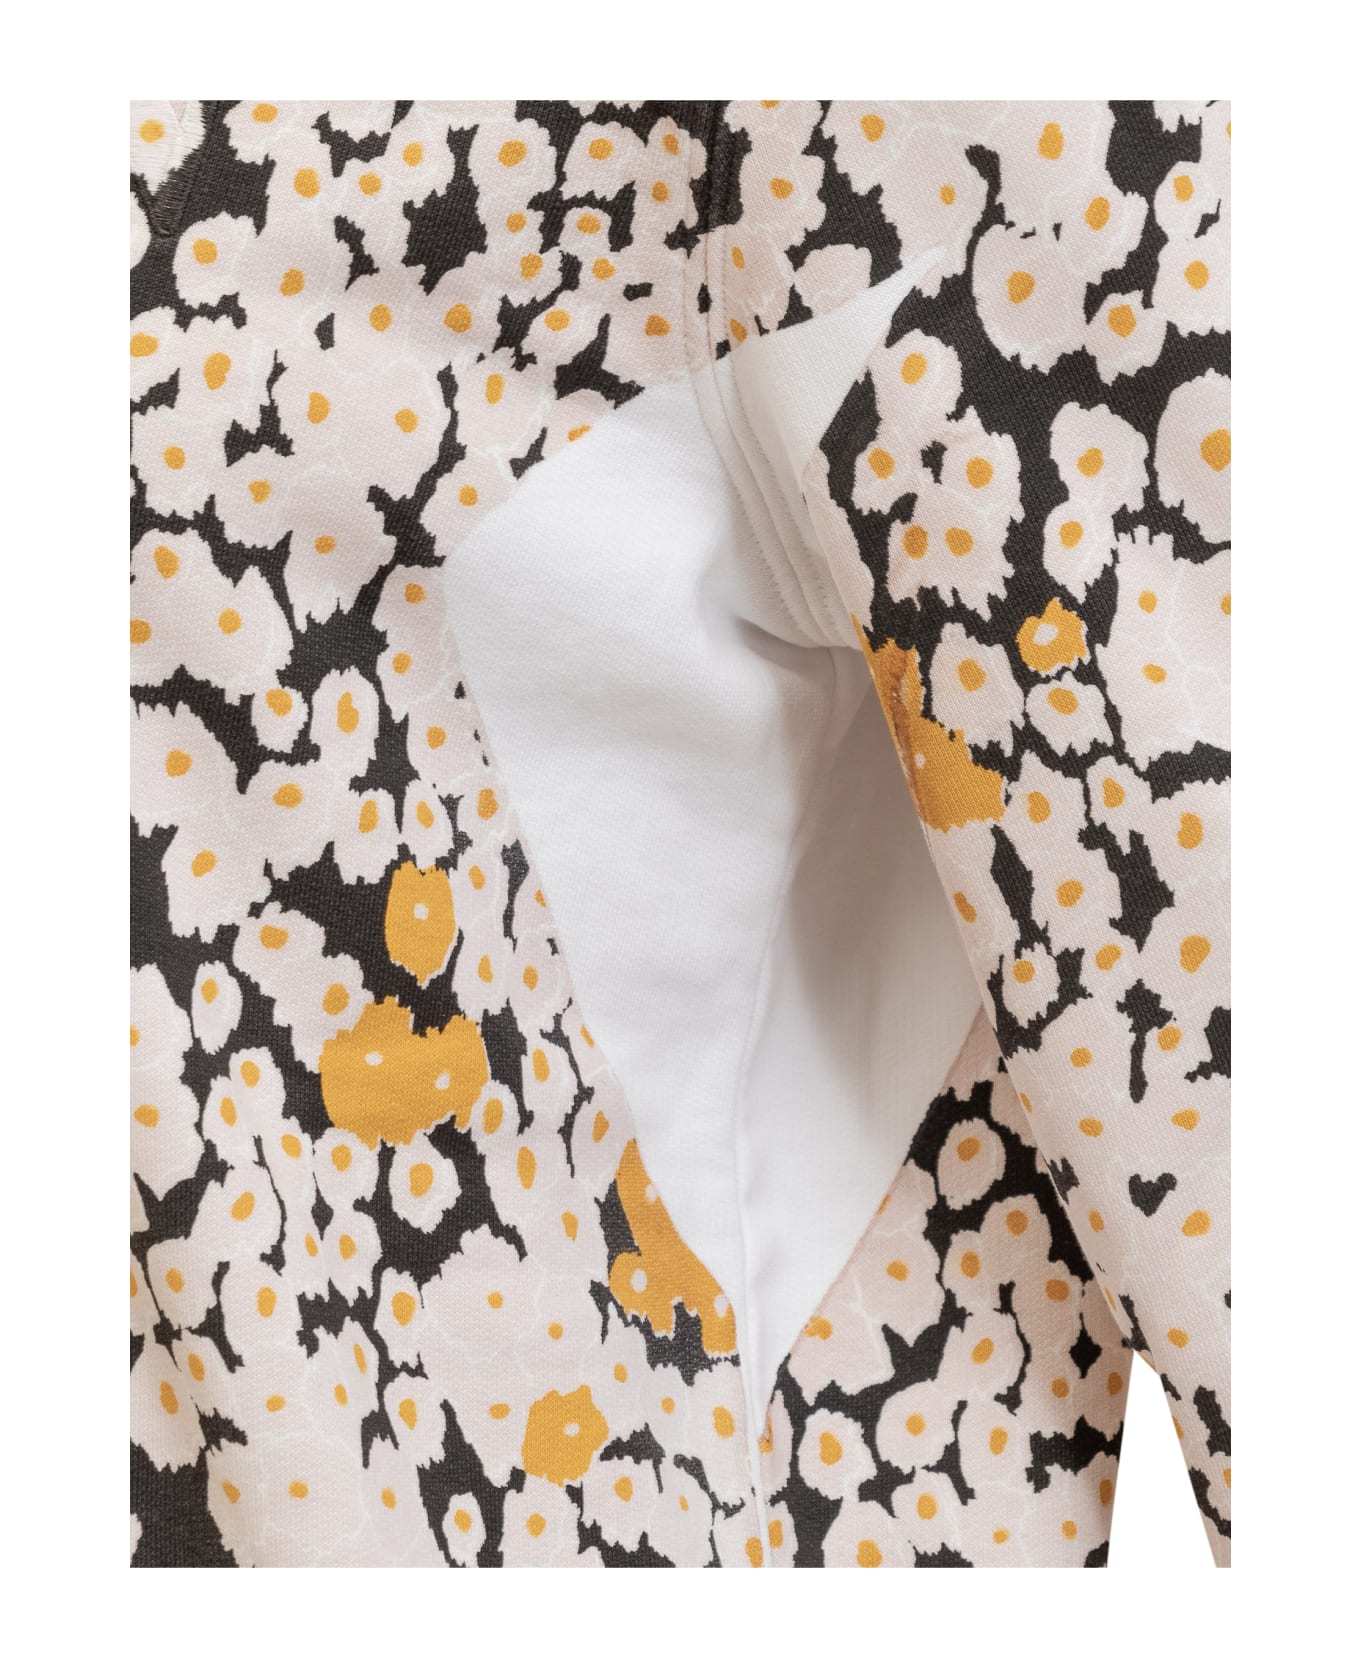 Lanvin Daisy Bouquets Sweatshirt - OPTIC WHITE/MULTICOLOR